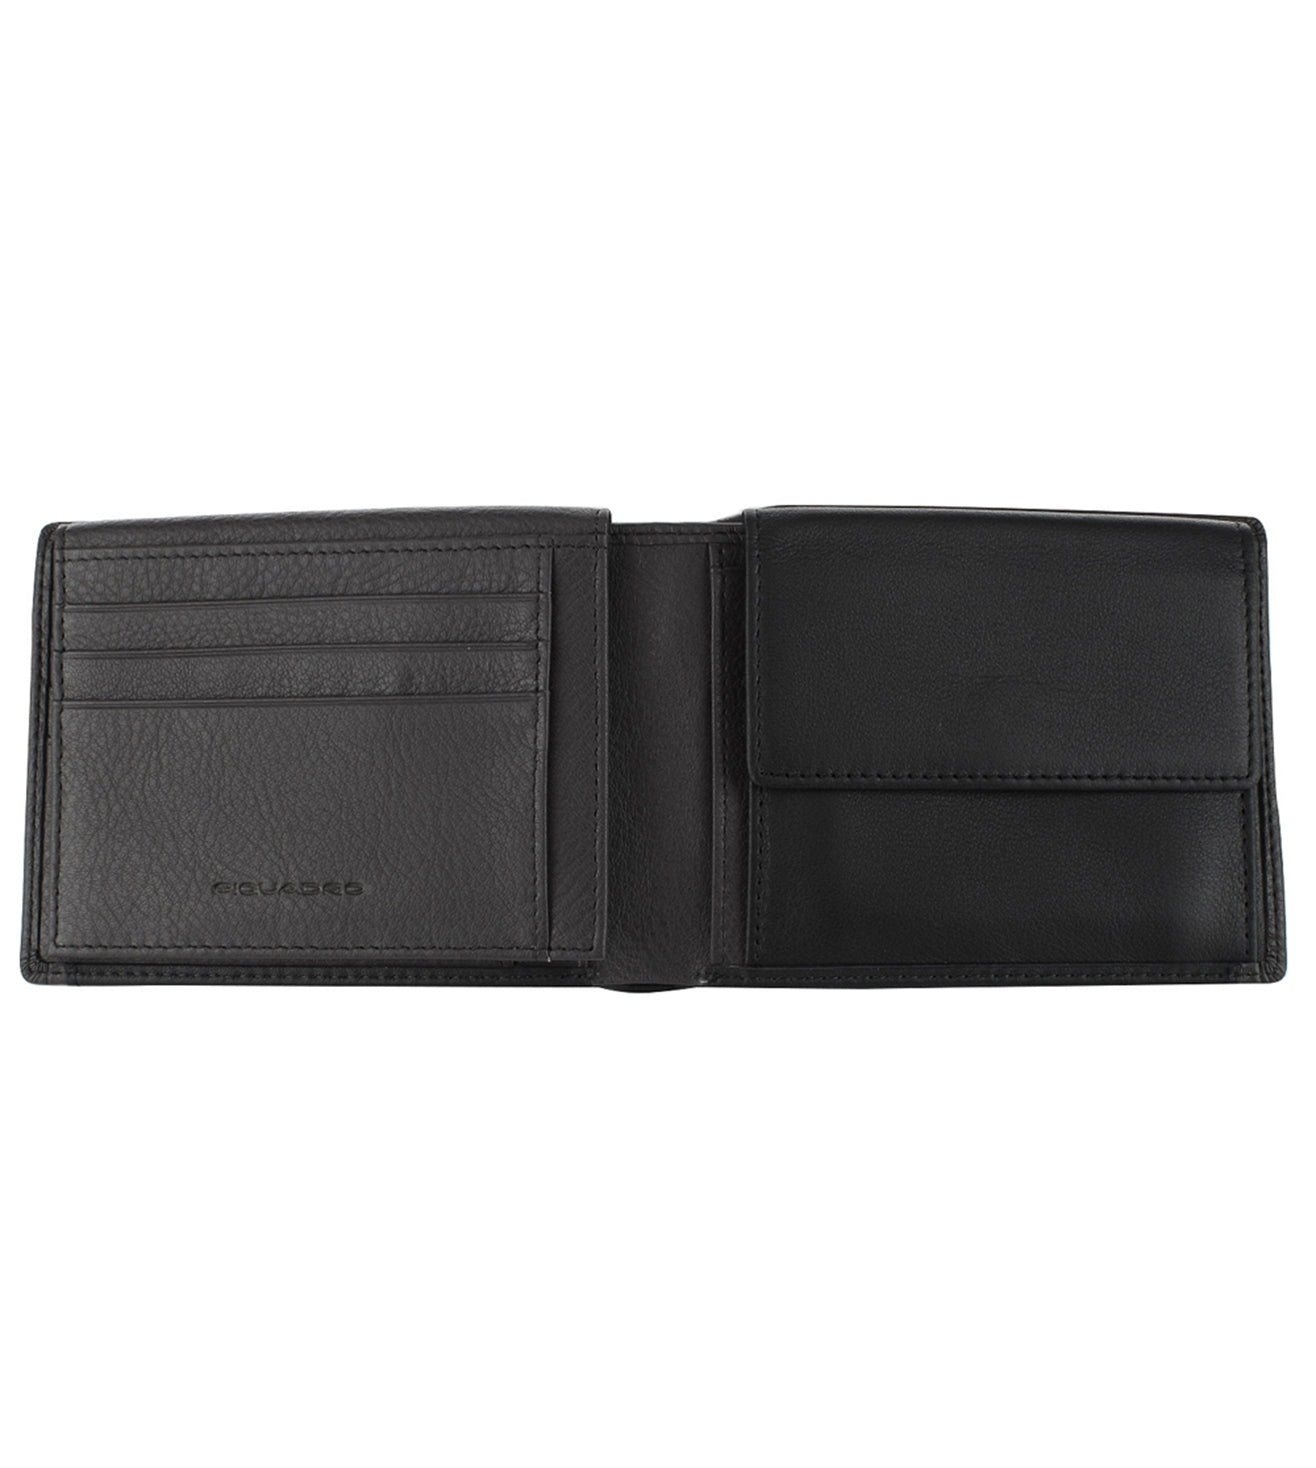 Piquadro Prisma Men's Black Wallet